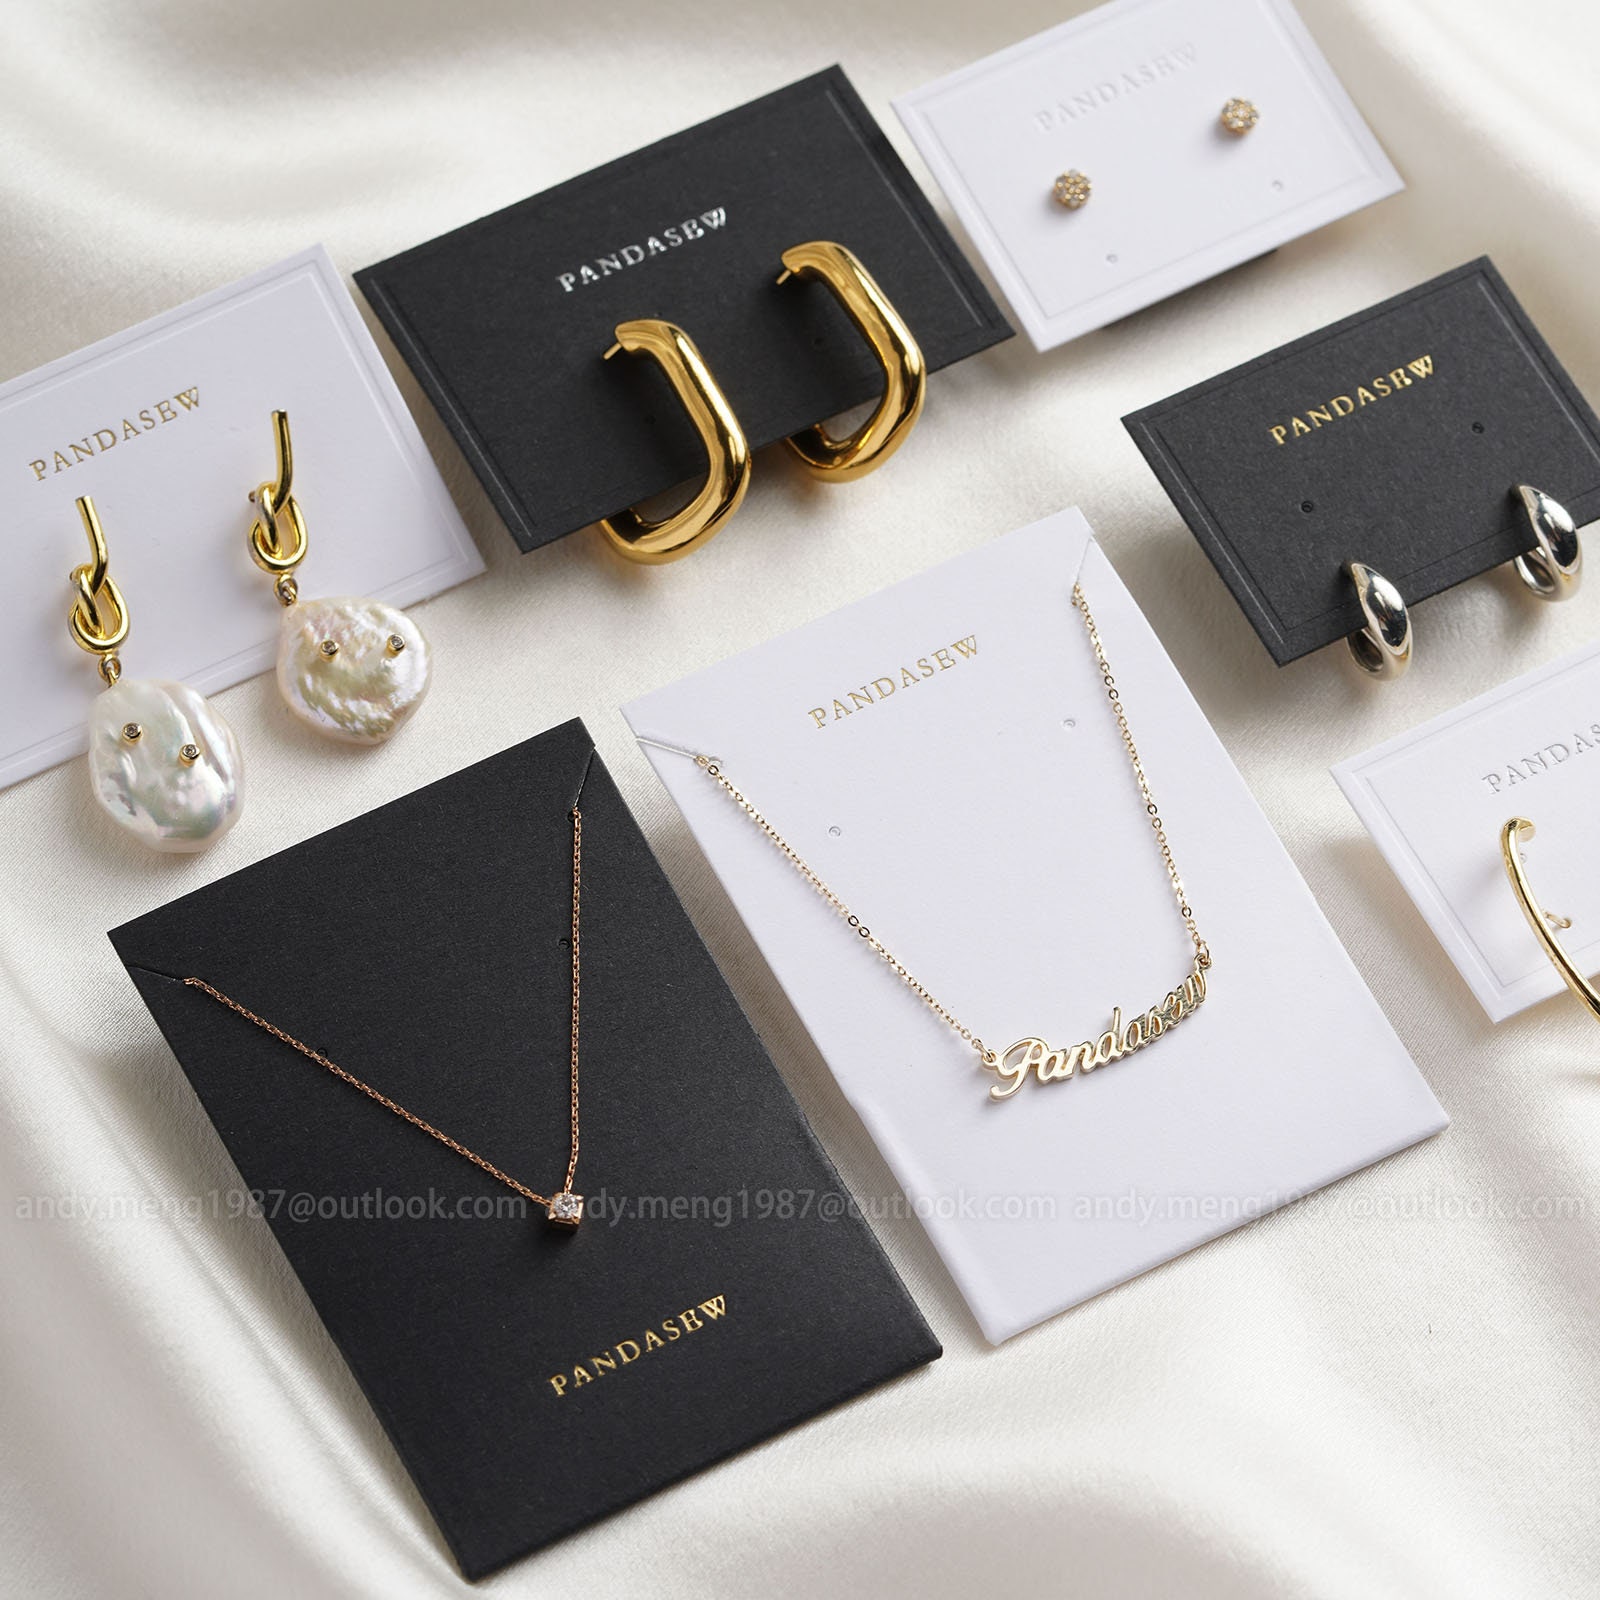 batifine Necklace Display Cards,Jewelry Packaging Cards for Small Business  Jewelry Packaging,Necklace Earrings Card Holder for DIY Necklace Bracelet